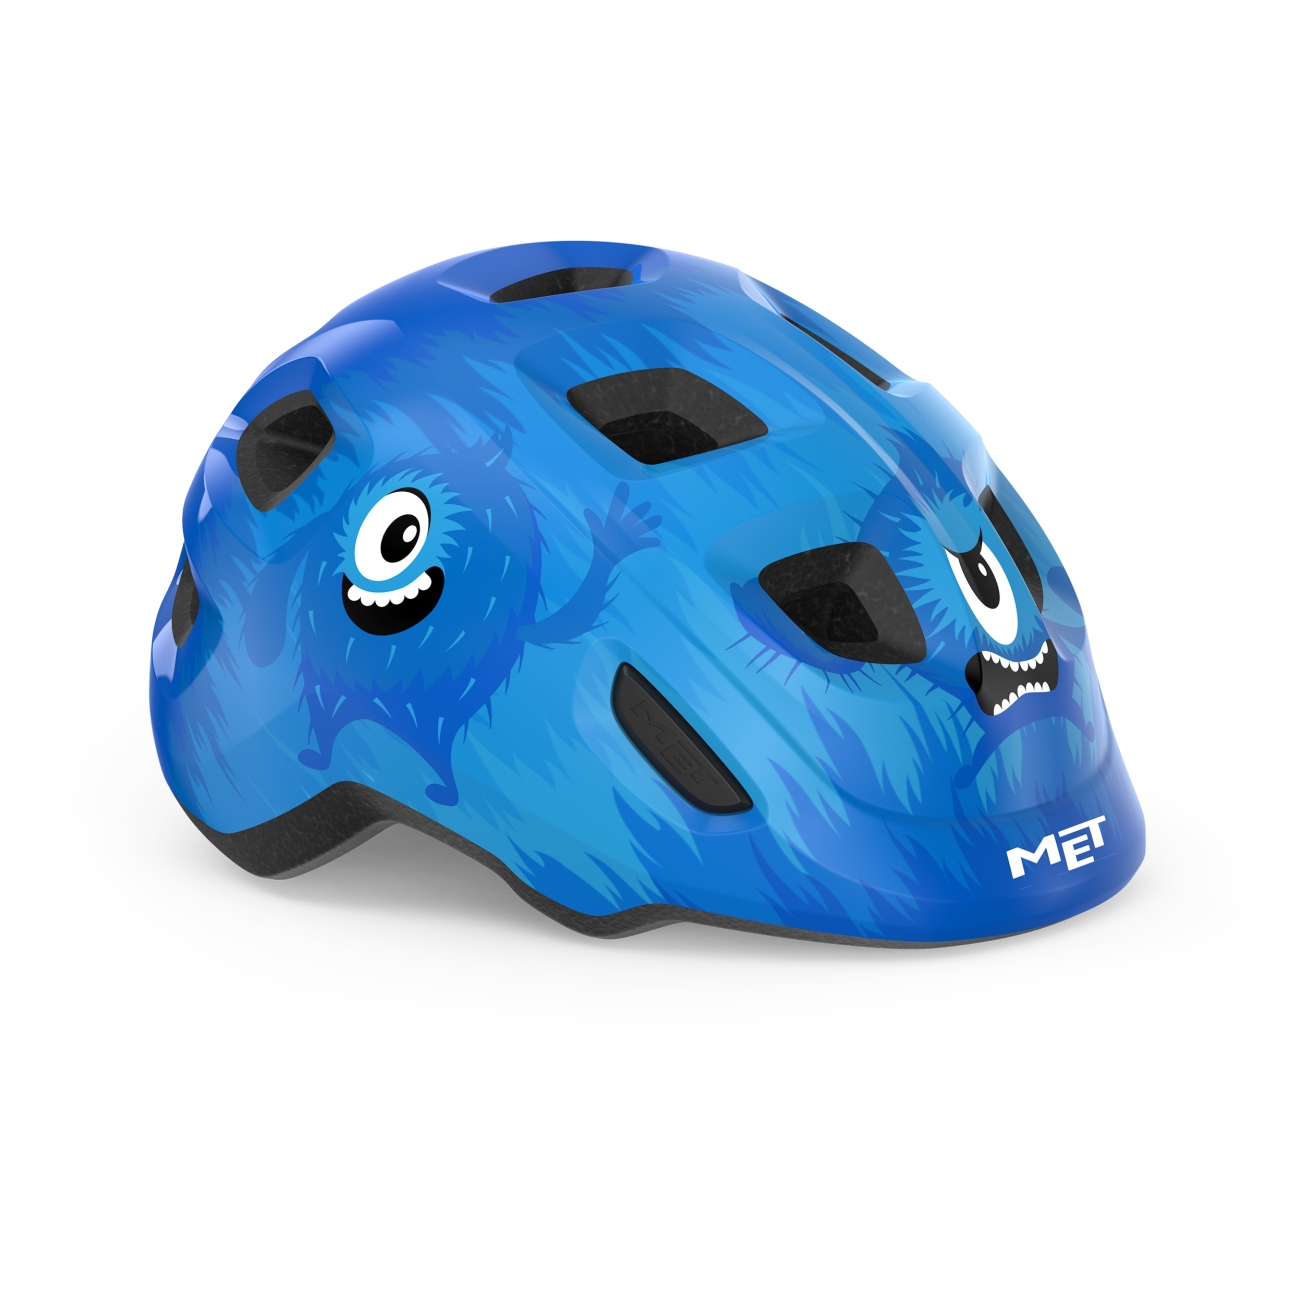 Produktbild von MET Hooray Fahrradhelm Kinder - blue monsters glossy